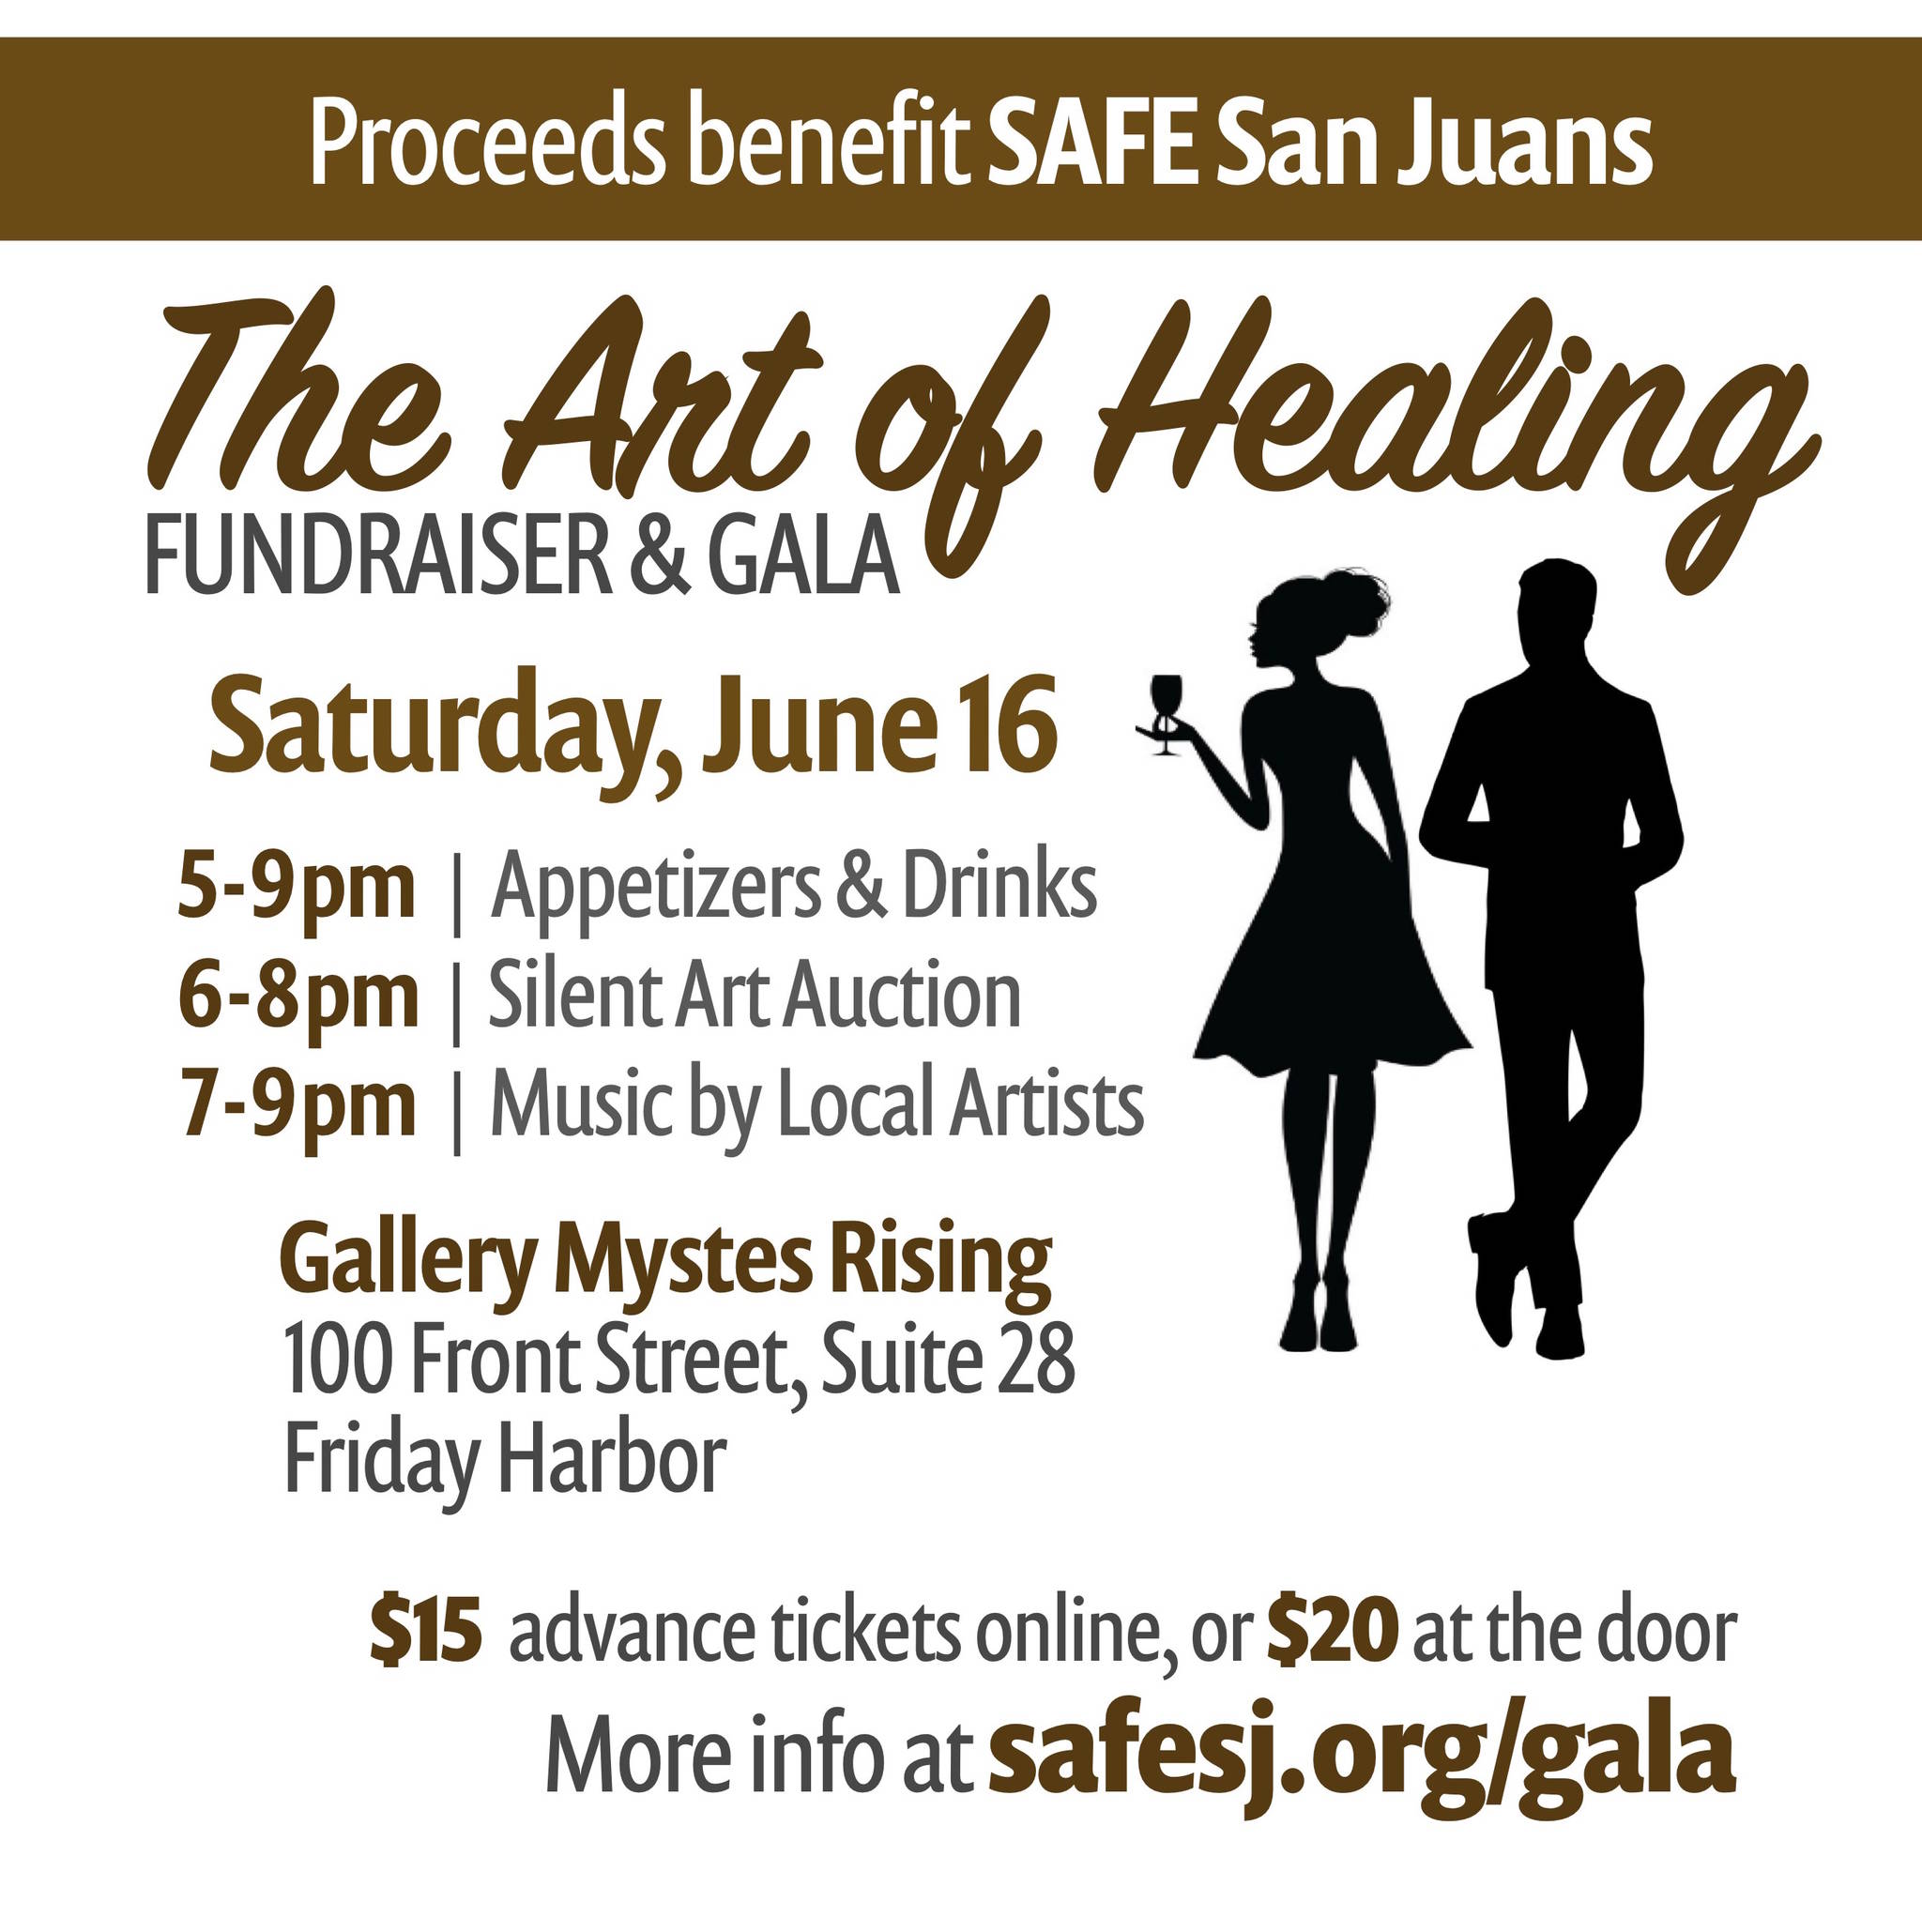 SAFE San Juans presents the Art of Healing gala